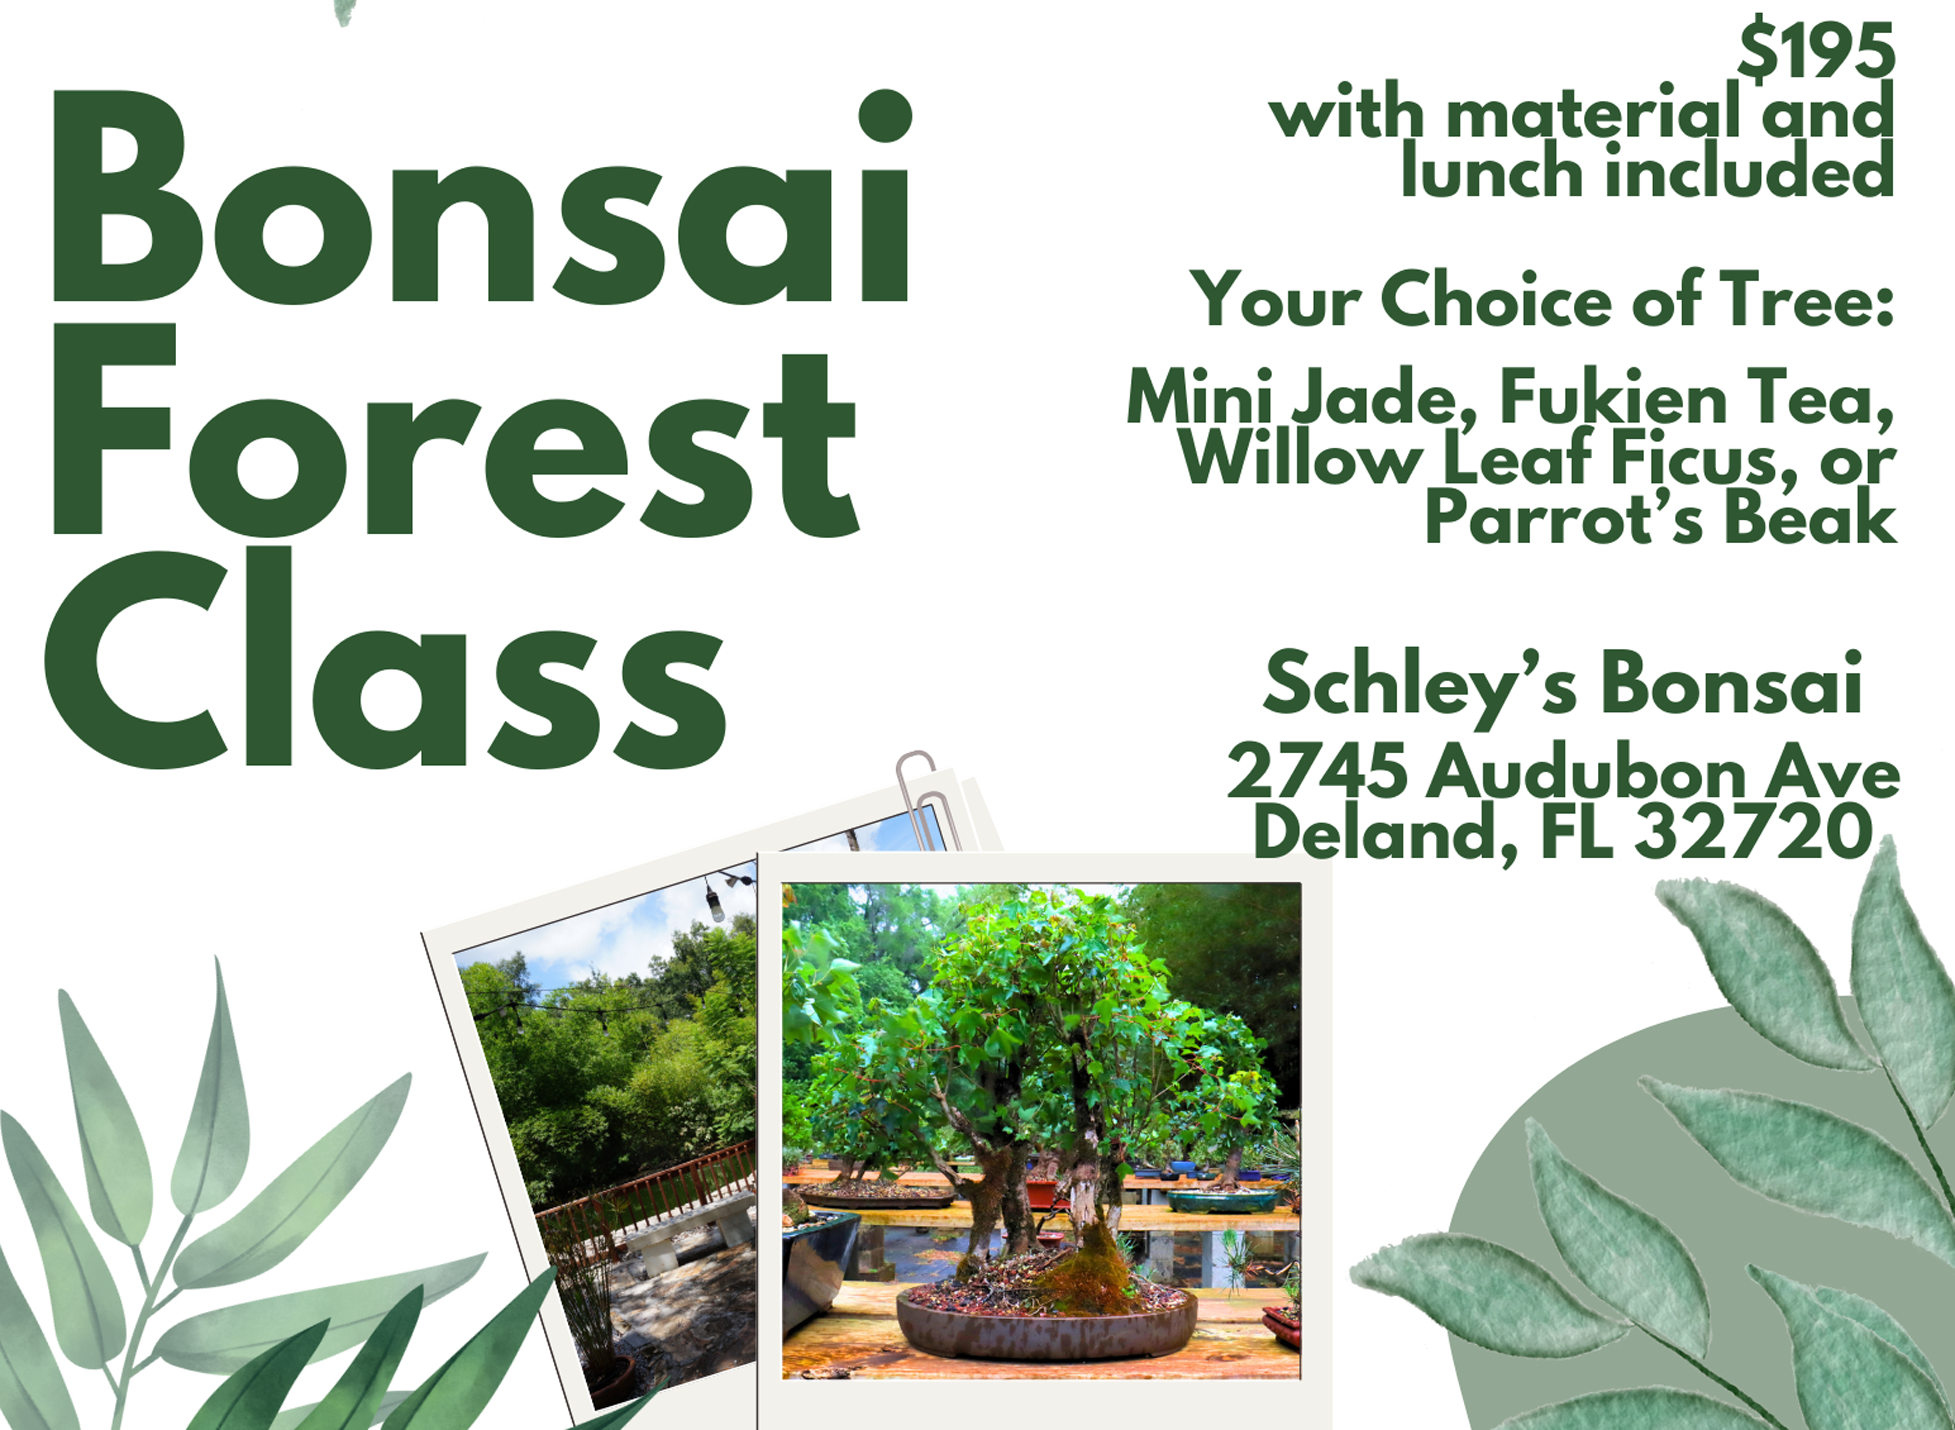 Bonsai Forest Class - Saturday, August 10th @ 9AM